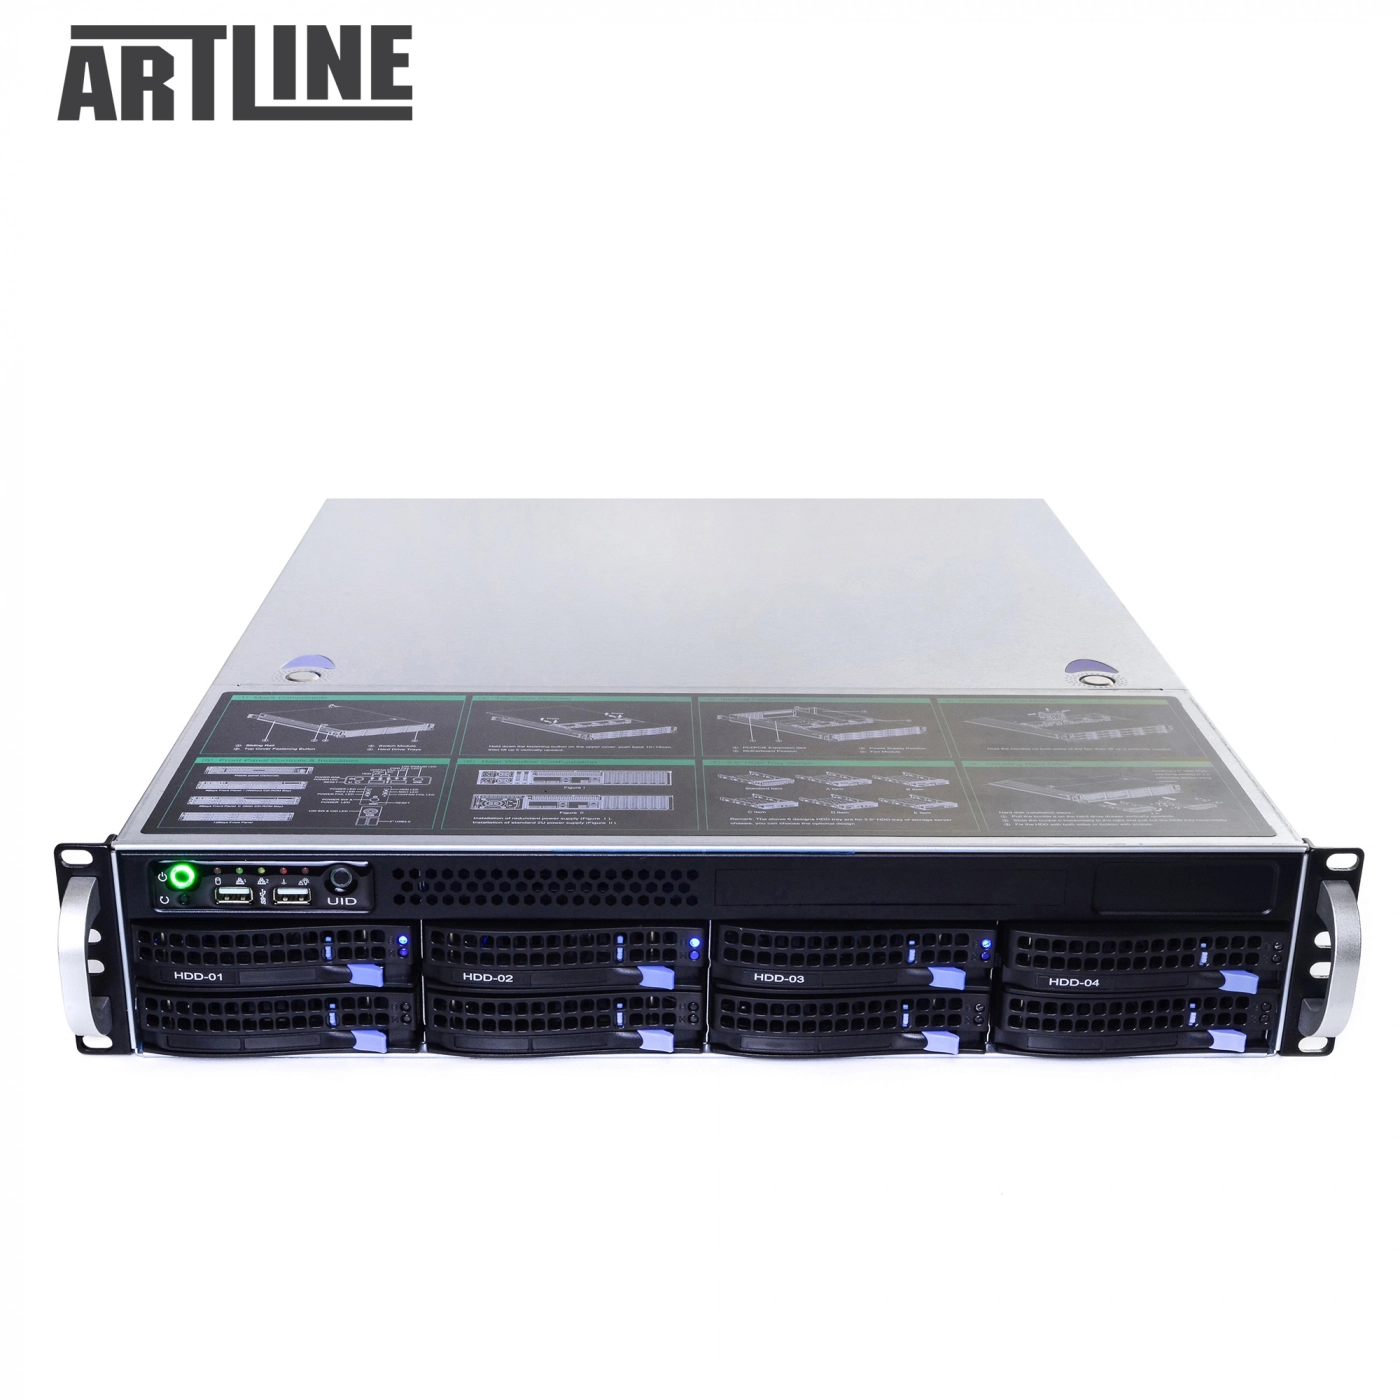 Купити Сервер ARTLINE Business R81v09 - фото 9